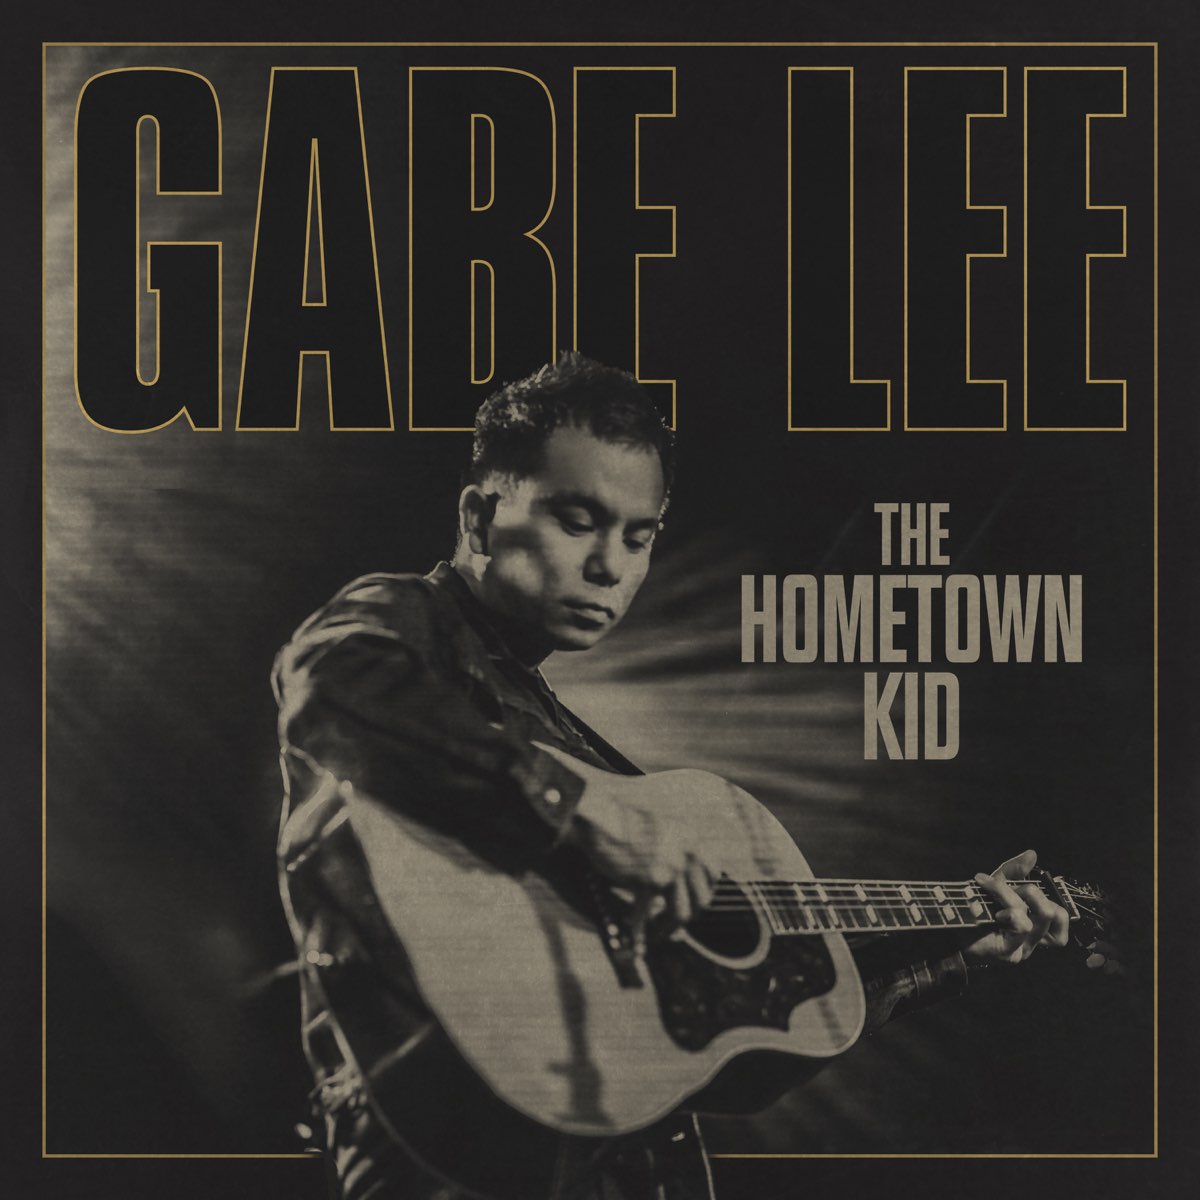 The Hometown Kid by Gabe Lee on Apple Music